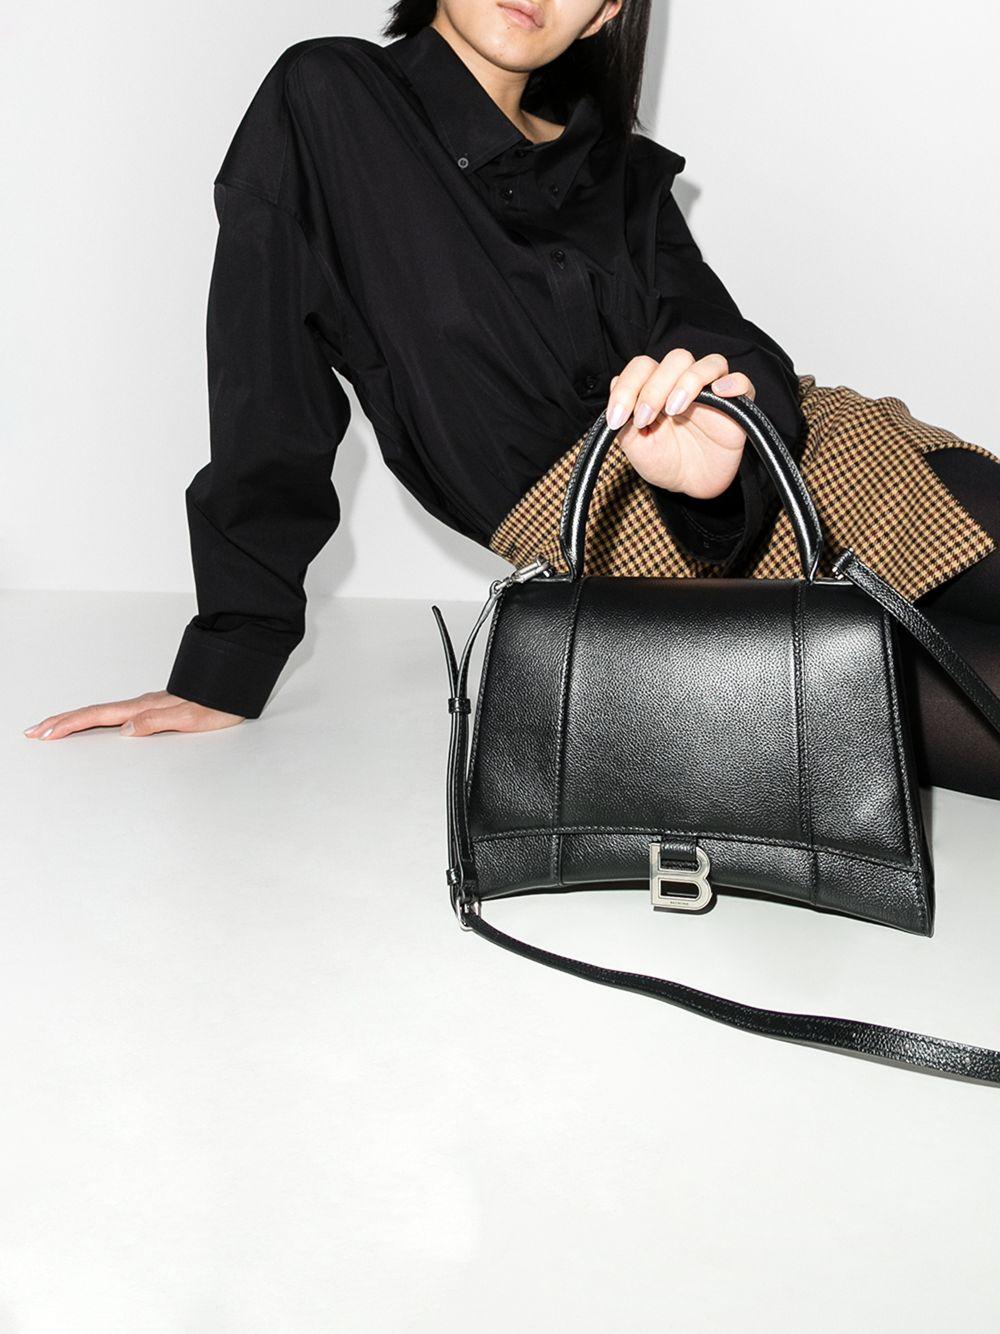 Balenciaga Hourglass Medium Leather Top Handle Bag in Black | Lyst